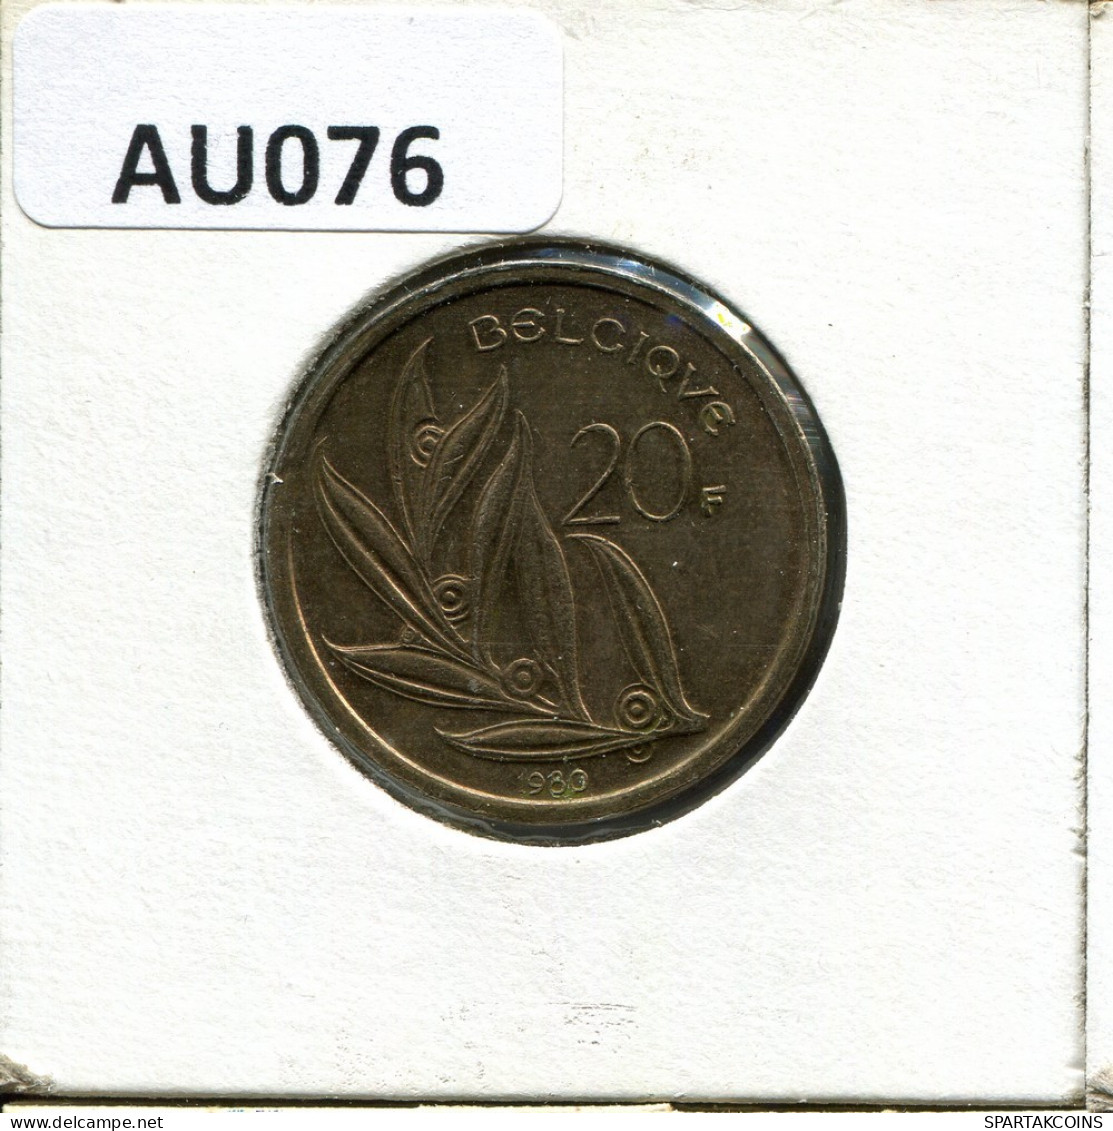 20 FRANCS 1980 Französisch Text BELGIEN BELGIUM Münze #AU076.D.A - 20 Frank